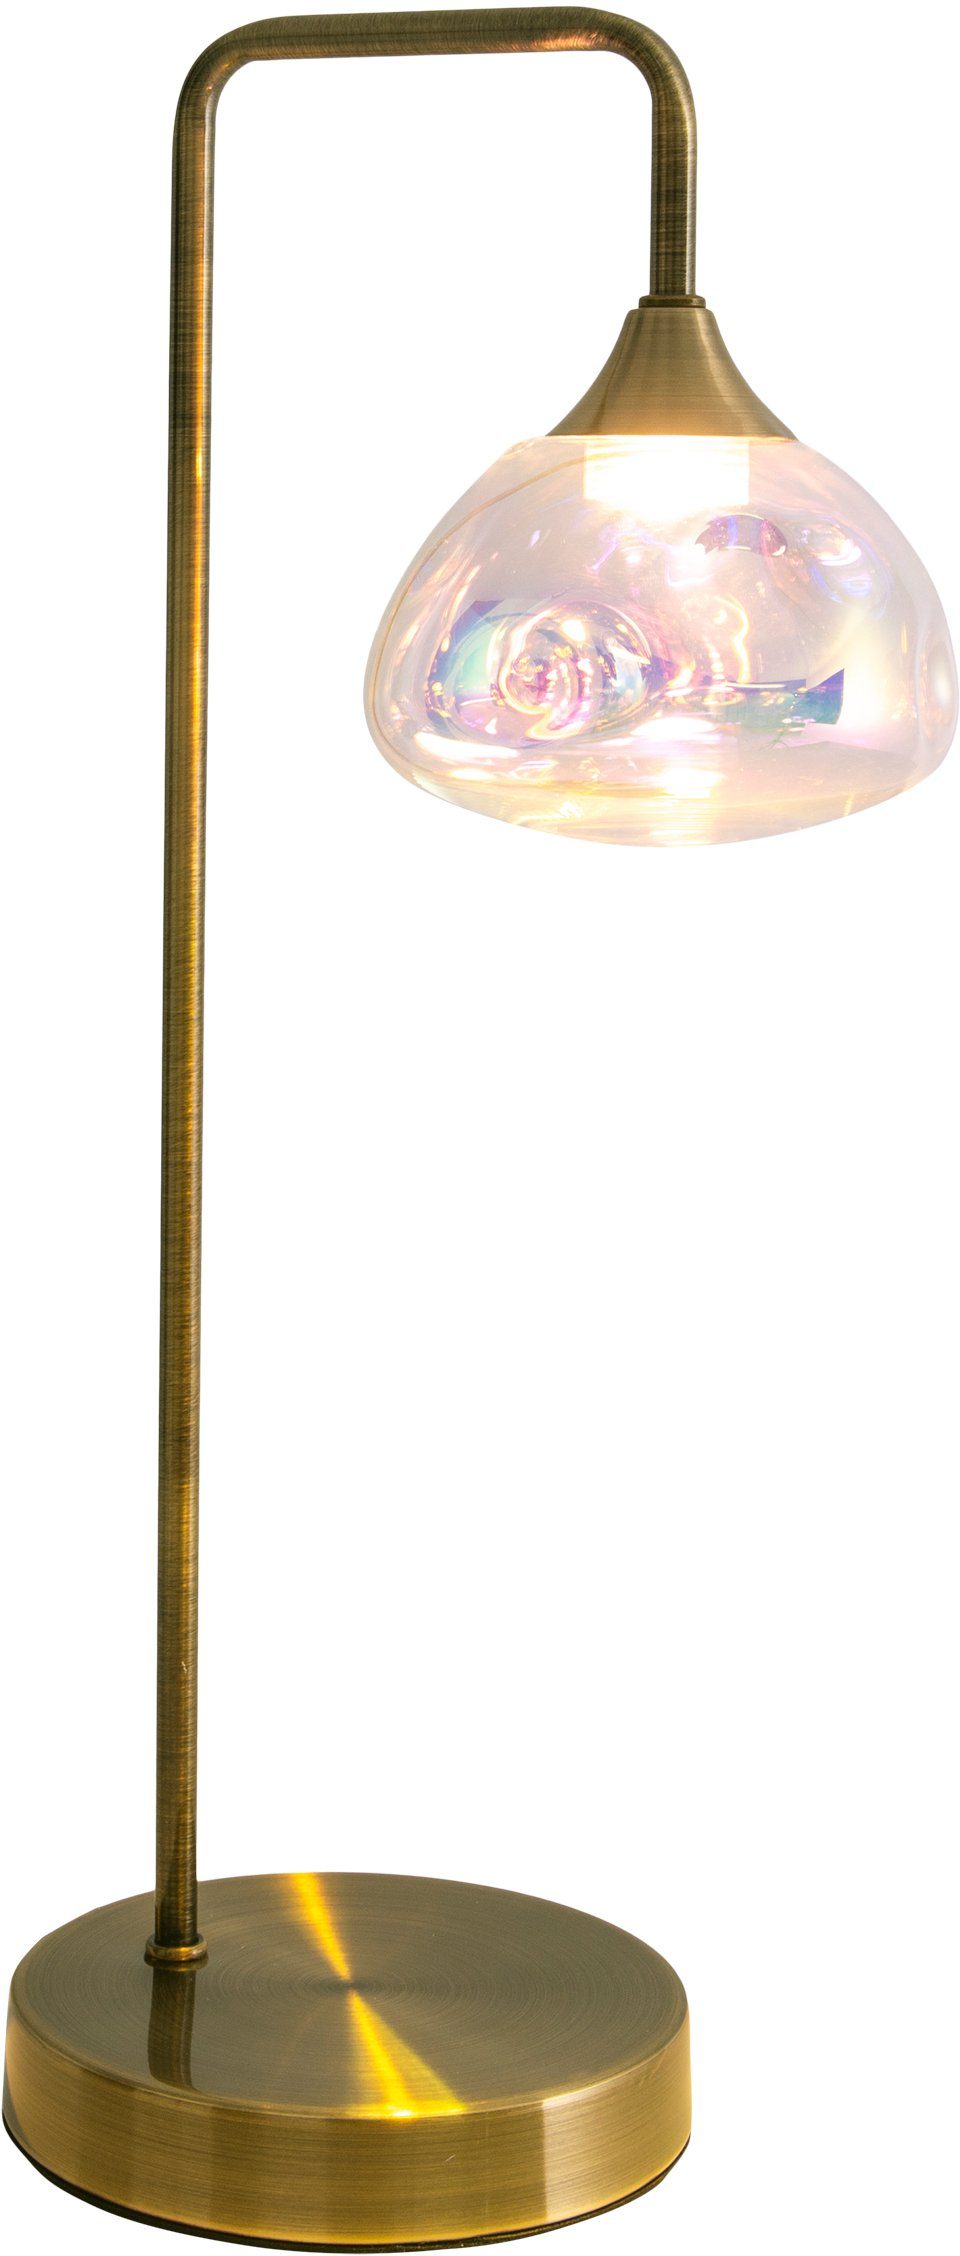 irisierendes messing fest LEDs Gestell 1 6 warmweiß Varna, Glas näve LED flg. integriert, LED incl. Warmweiß, Tischleuchte